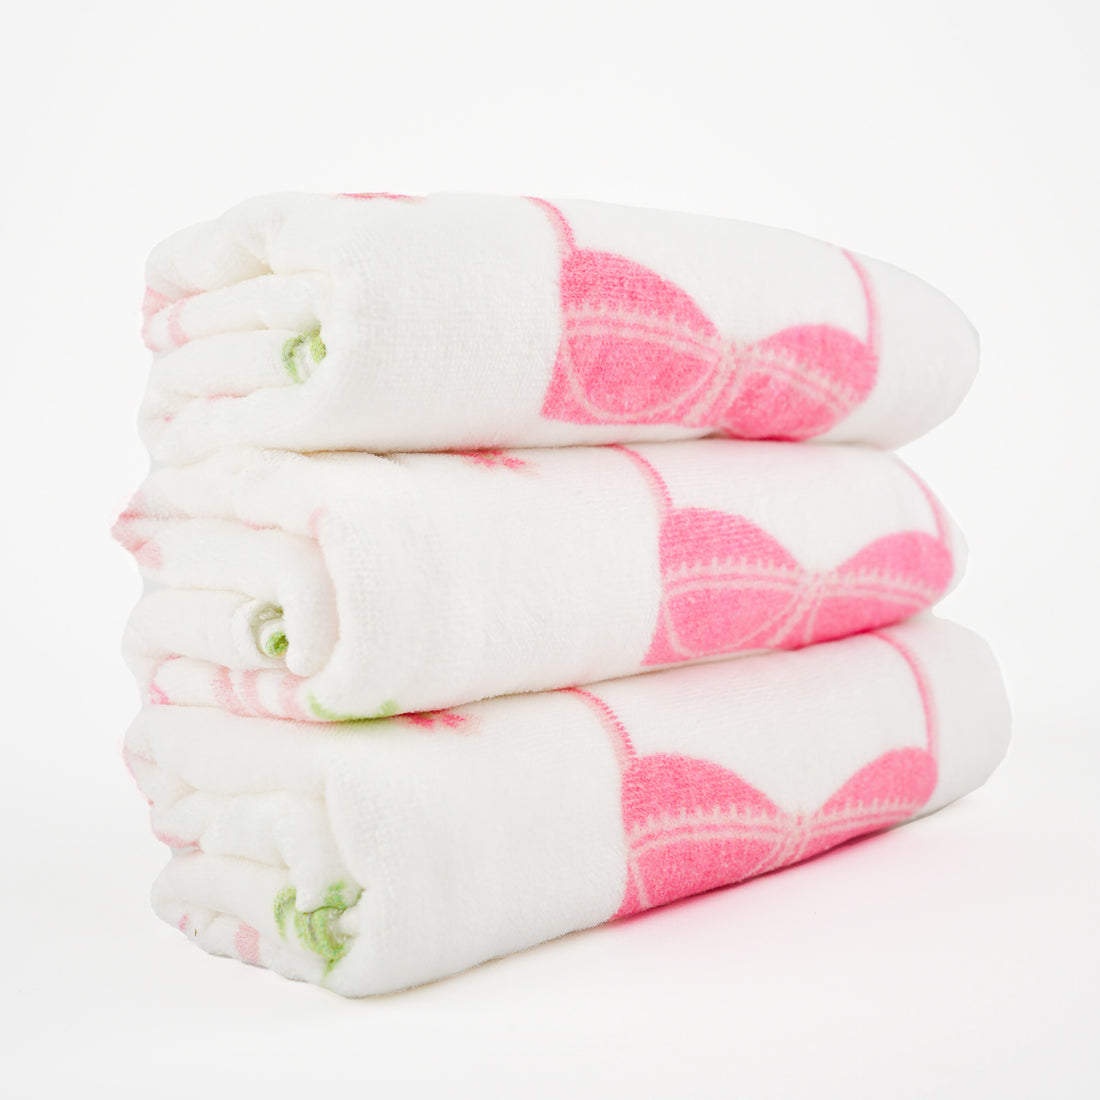 Wacoal Cotton Candy Towel ผ้าขนหนูเช็ดผม รุ่น WW120500 (มี 2 สี สีชมพู/สีขาว)